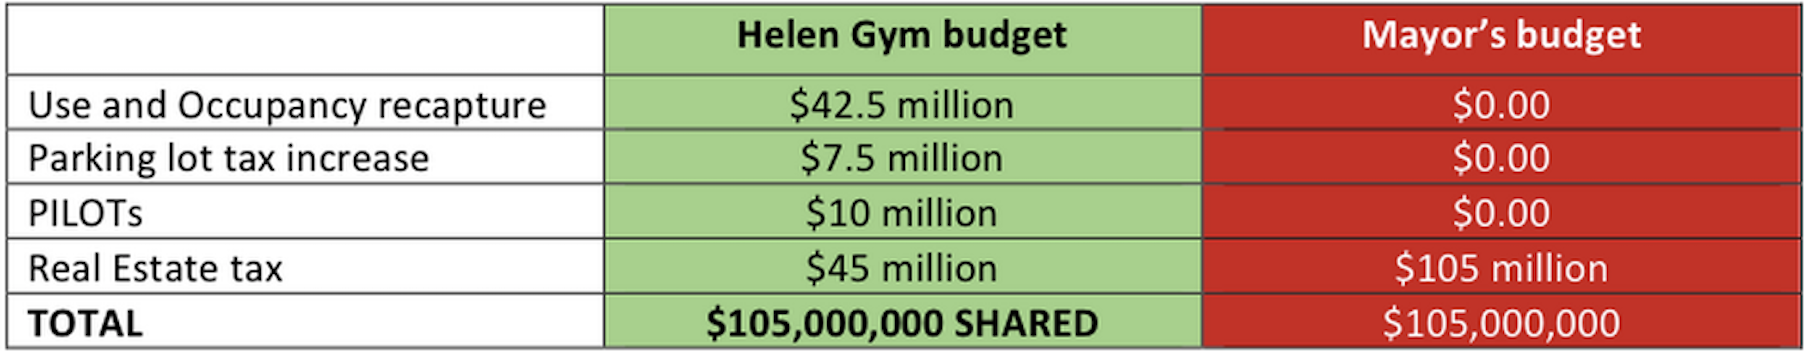 Helen Gym budget